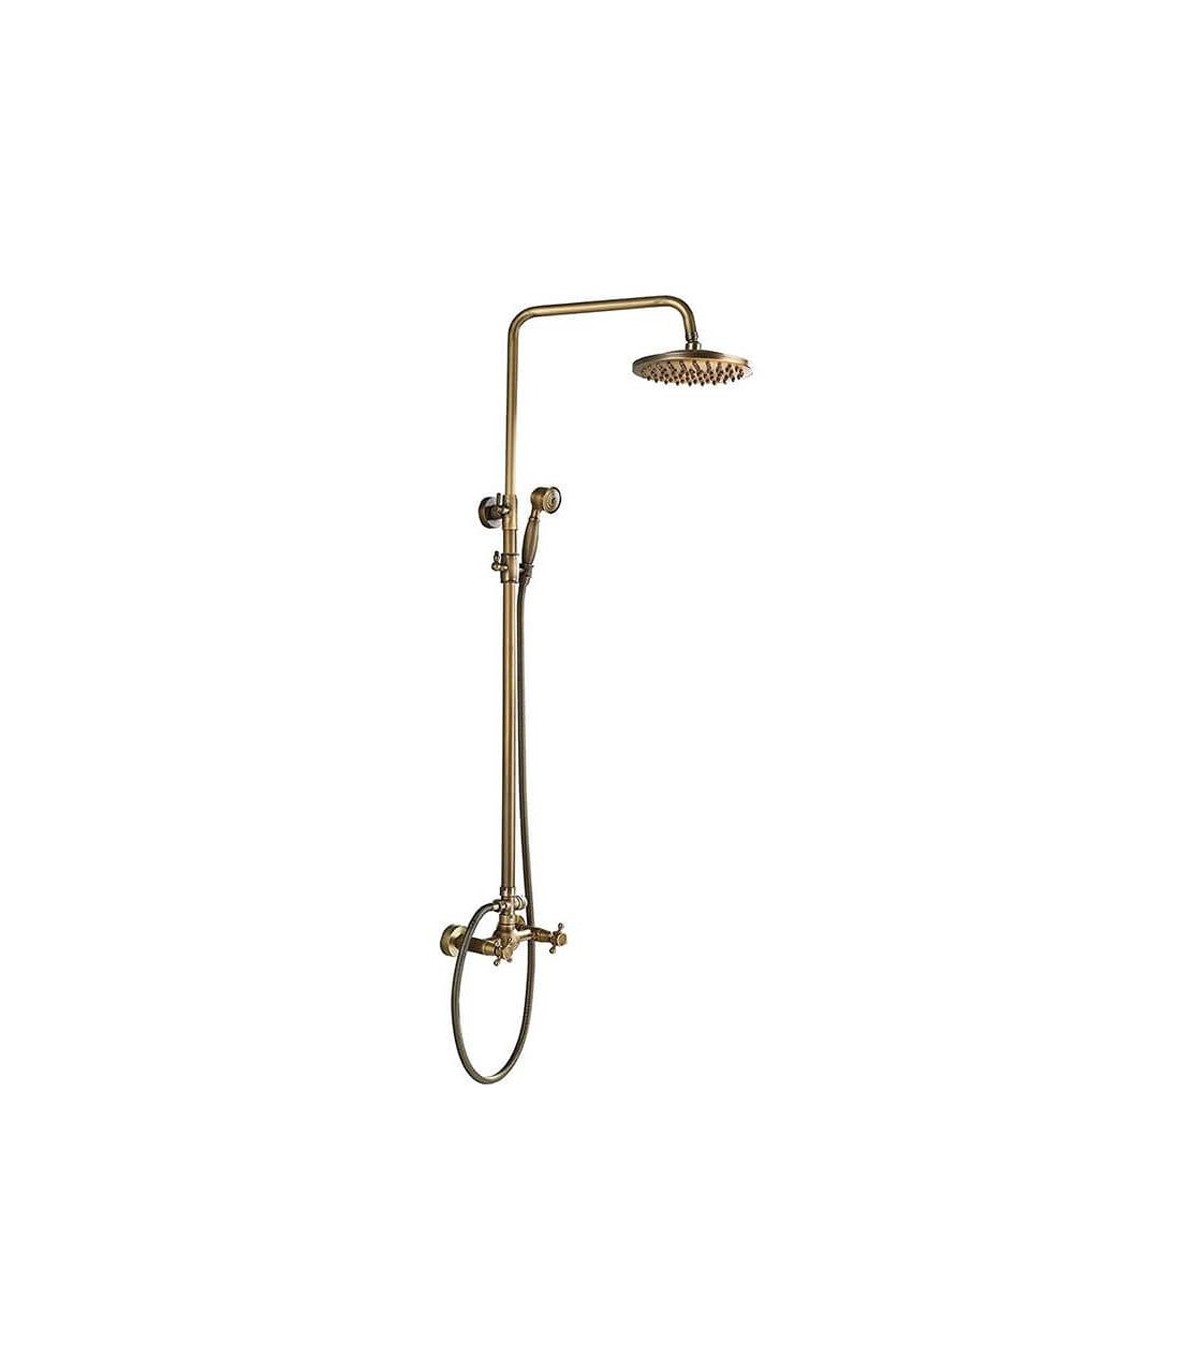 Comprar Barra de ducha termostatica redonda dorado cepillado online